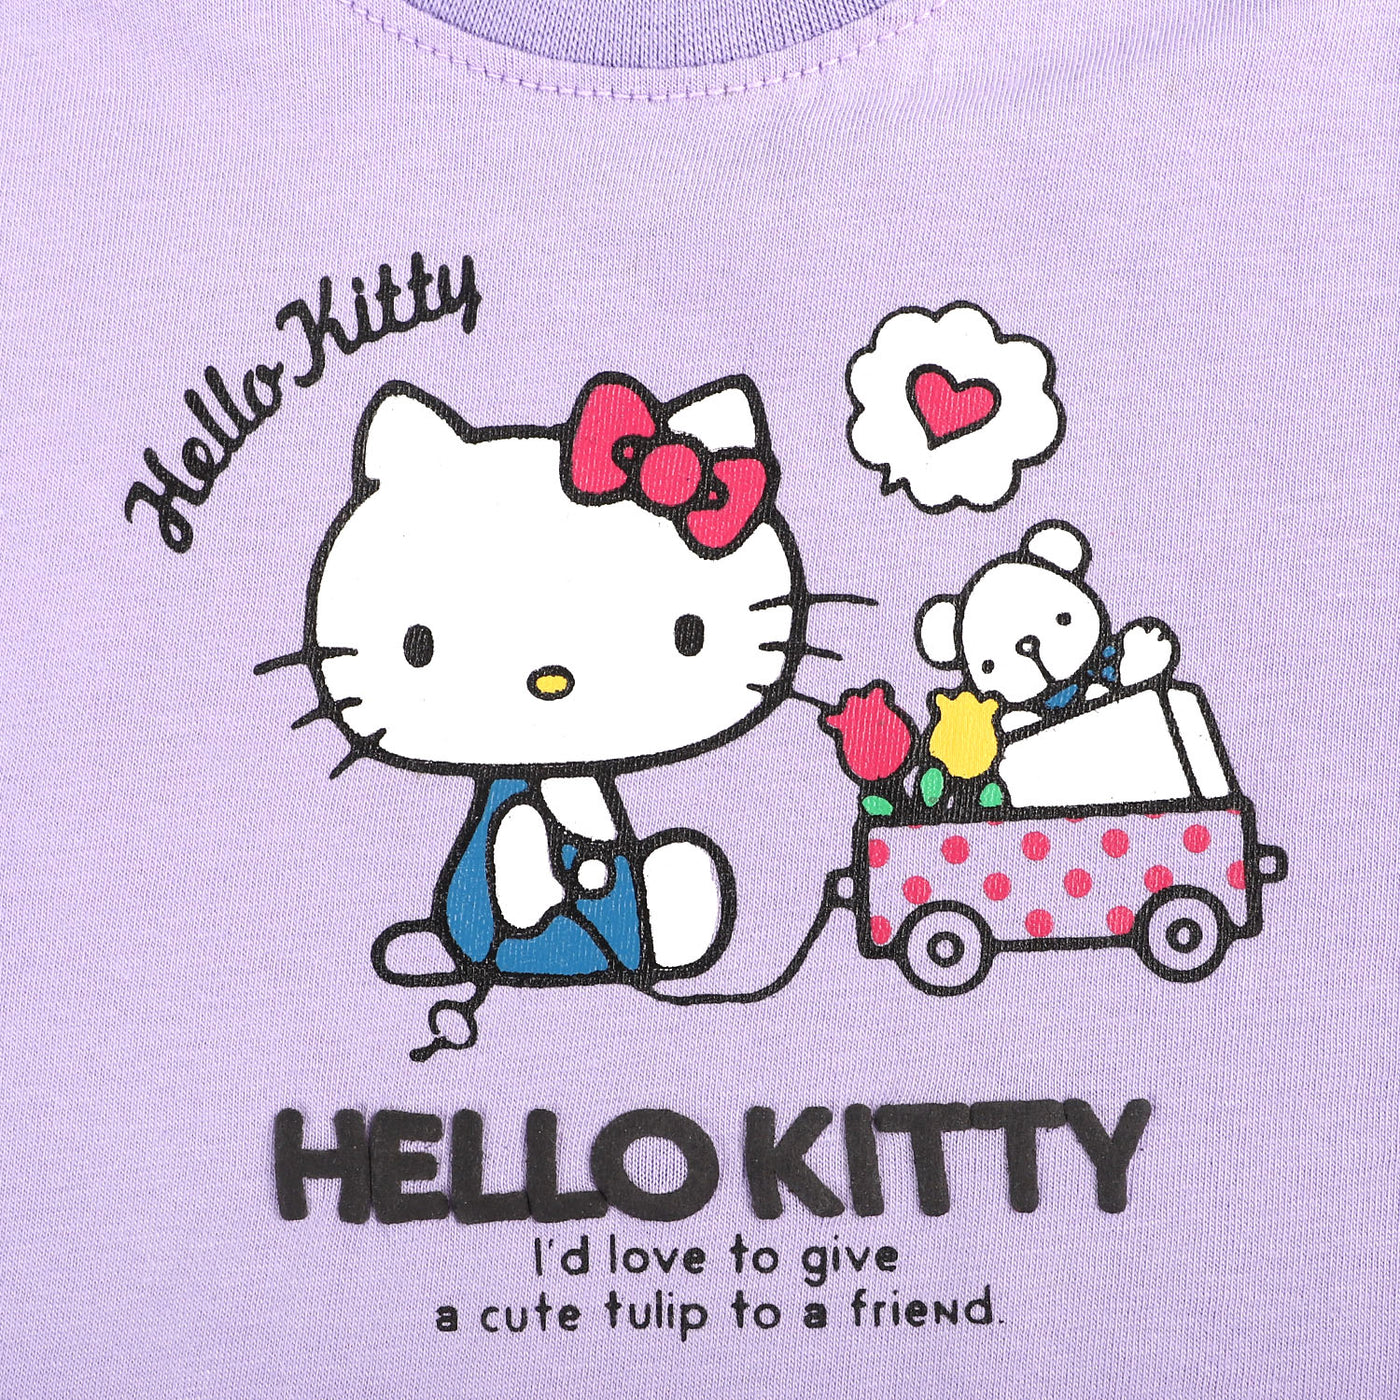 Infant Girls T-Shirt Character | Purple